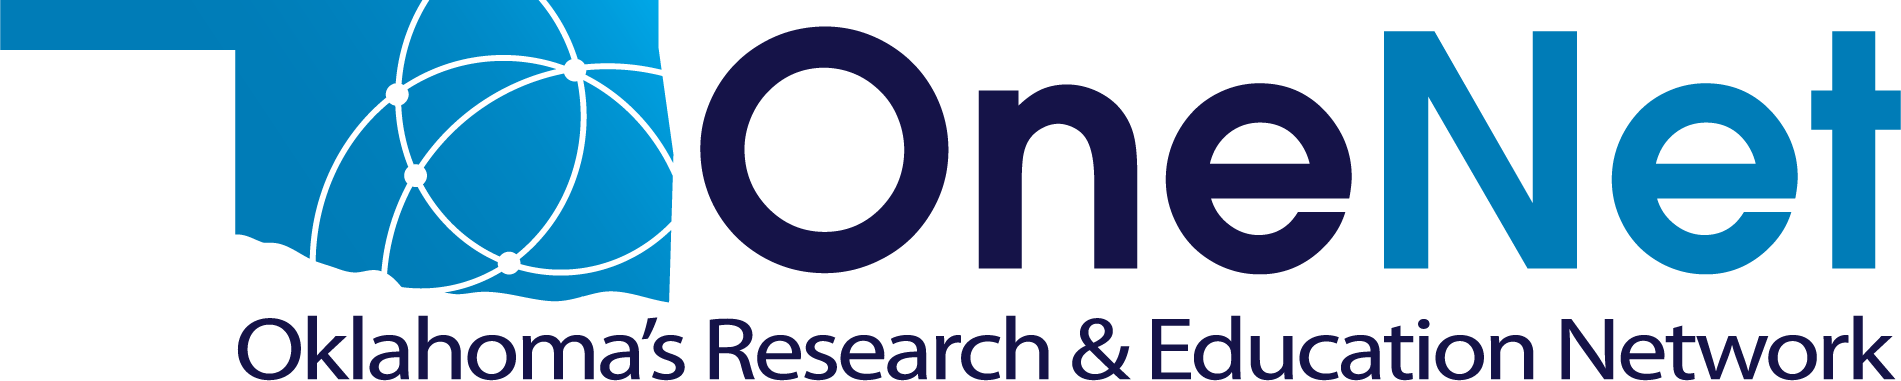 OneNet Logo - Oklahoma's Research & Education Network